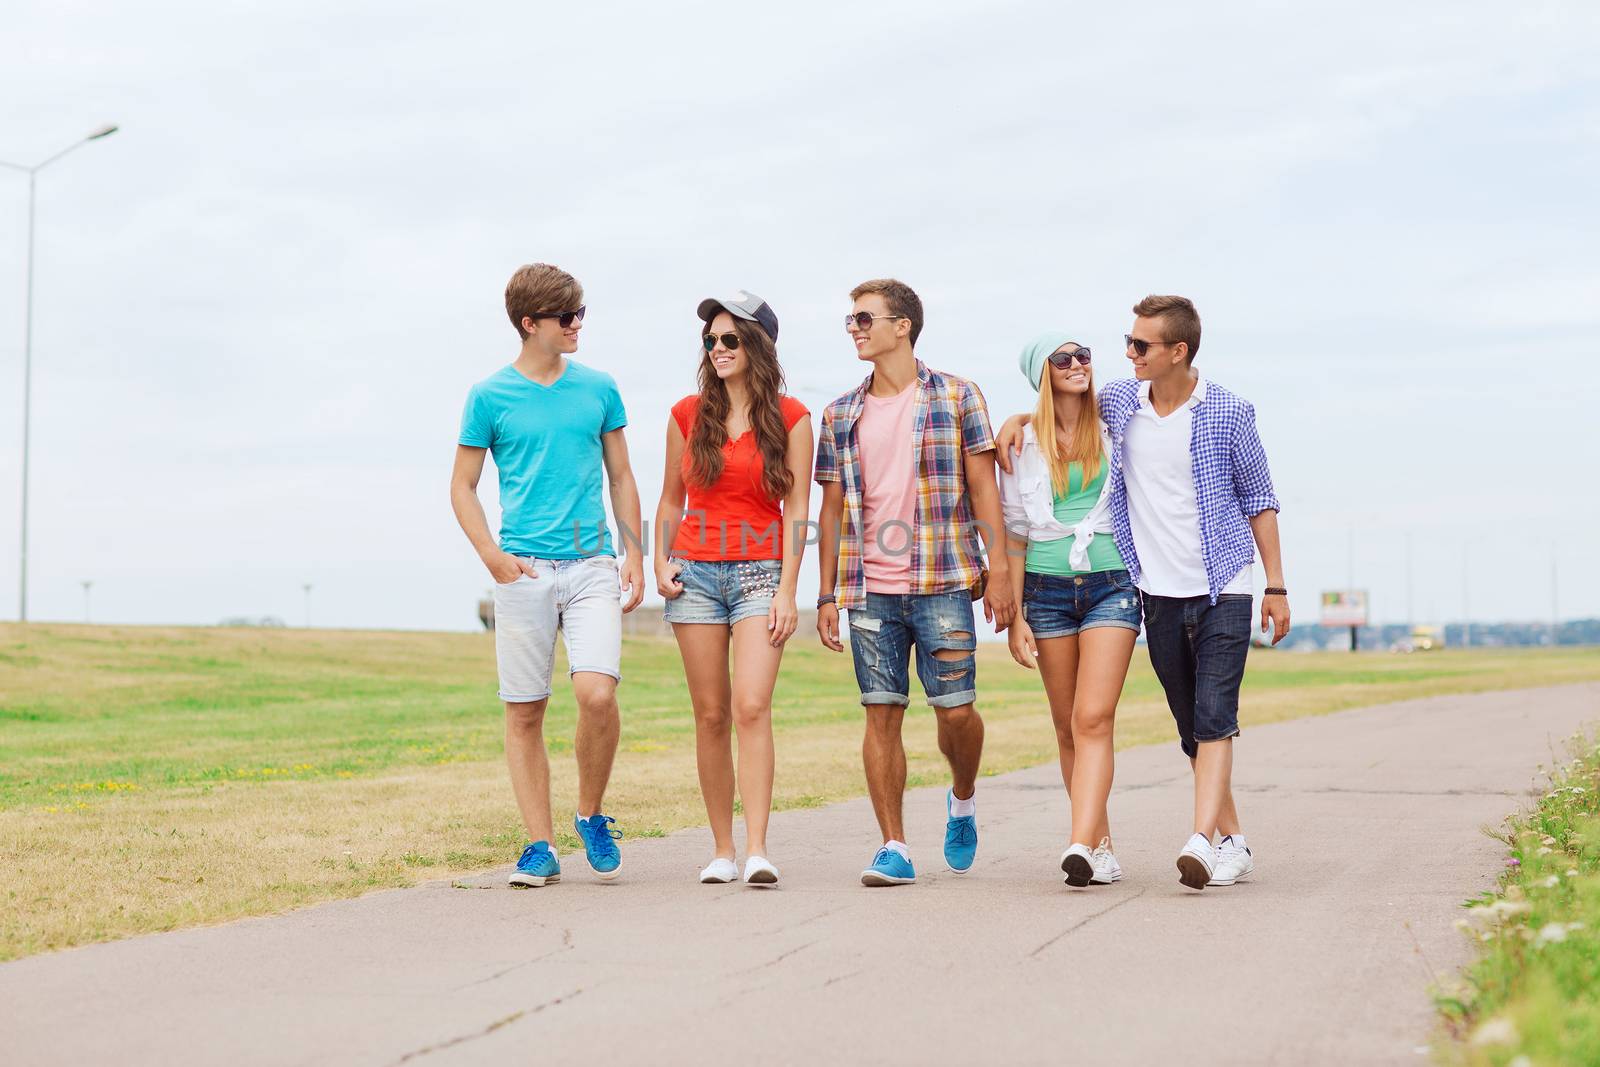 group of smiling teenagers walking outdoors by dolgachov